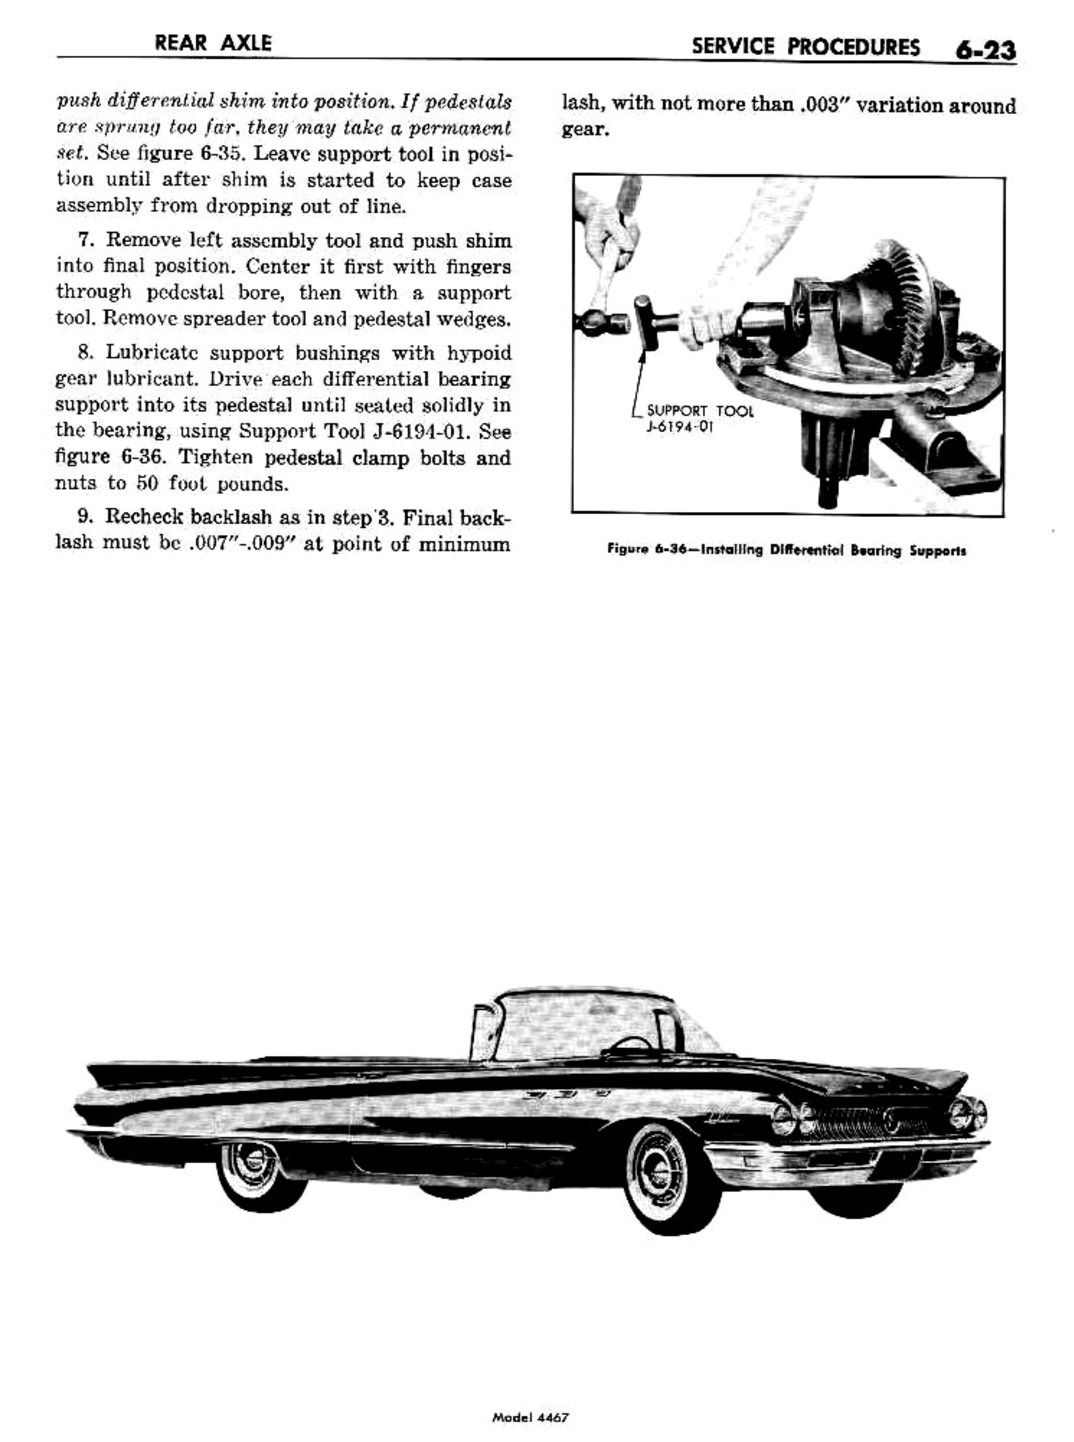 n_07 1960 Buick Shop Manual - Rear Axle-023-023.jpg